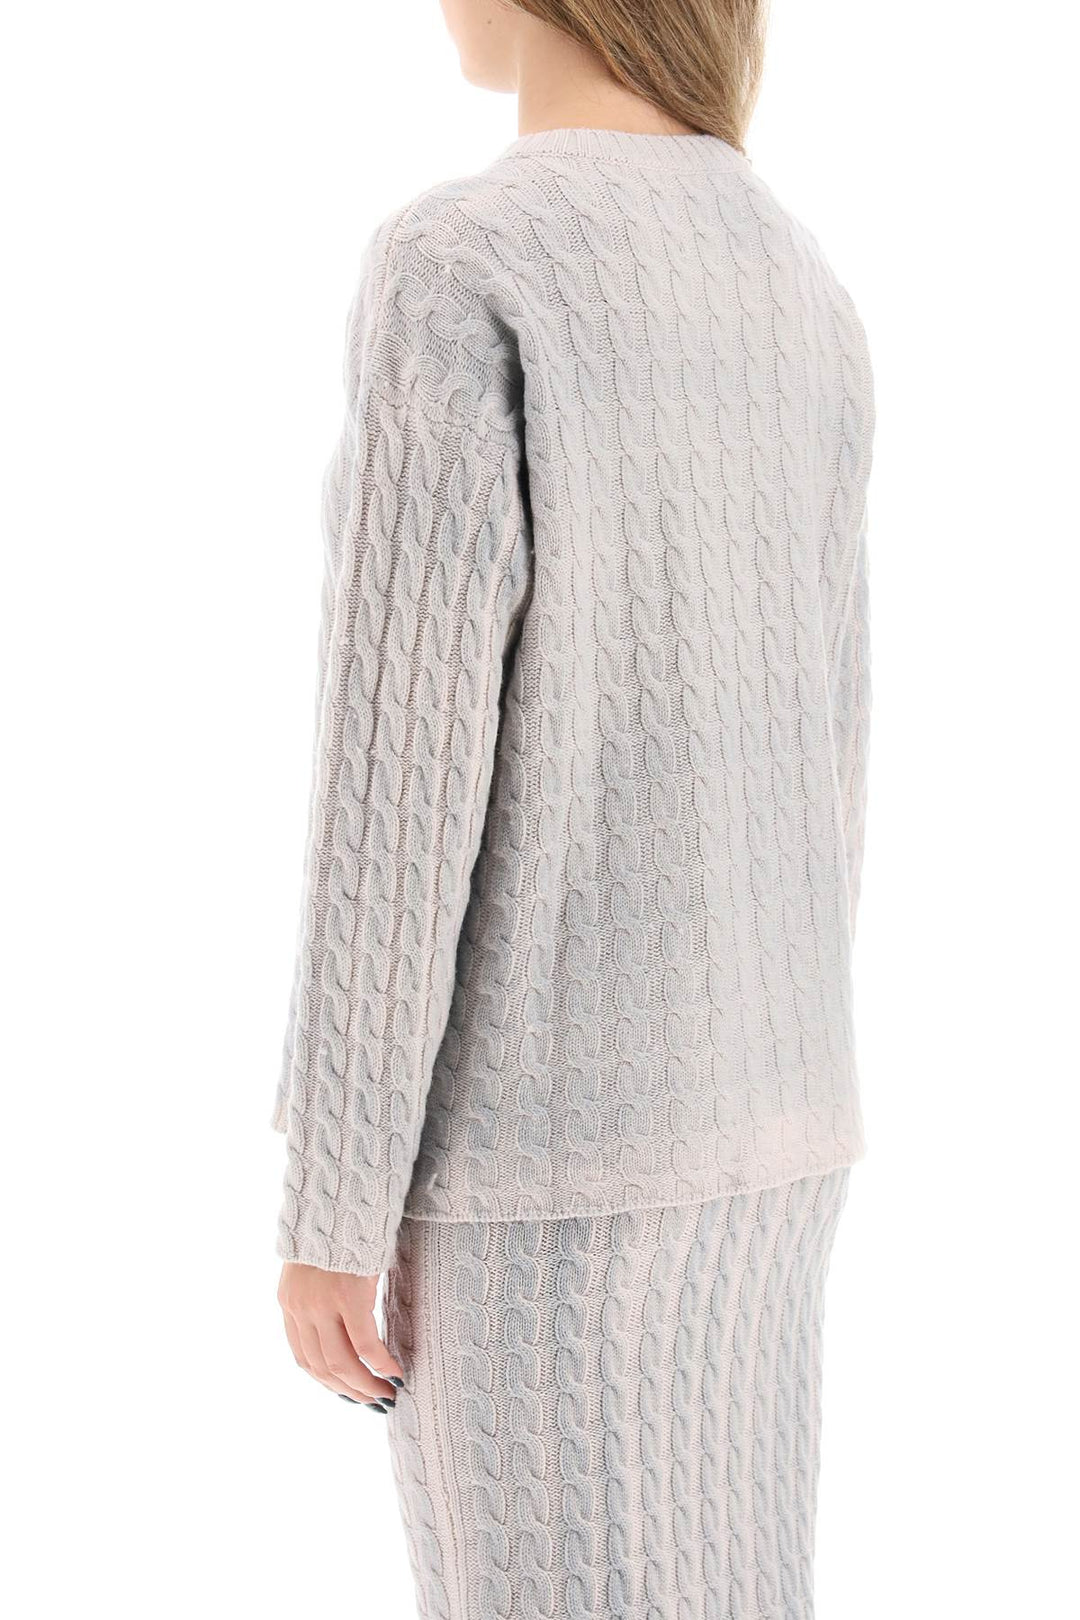 Paloma wool ainhoa cable knit sweater-2